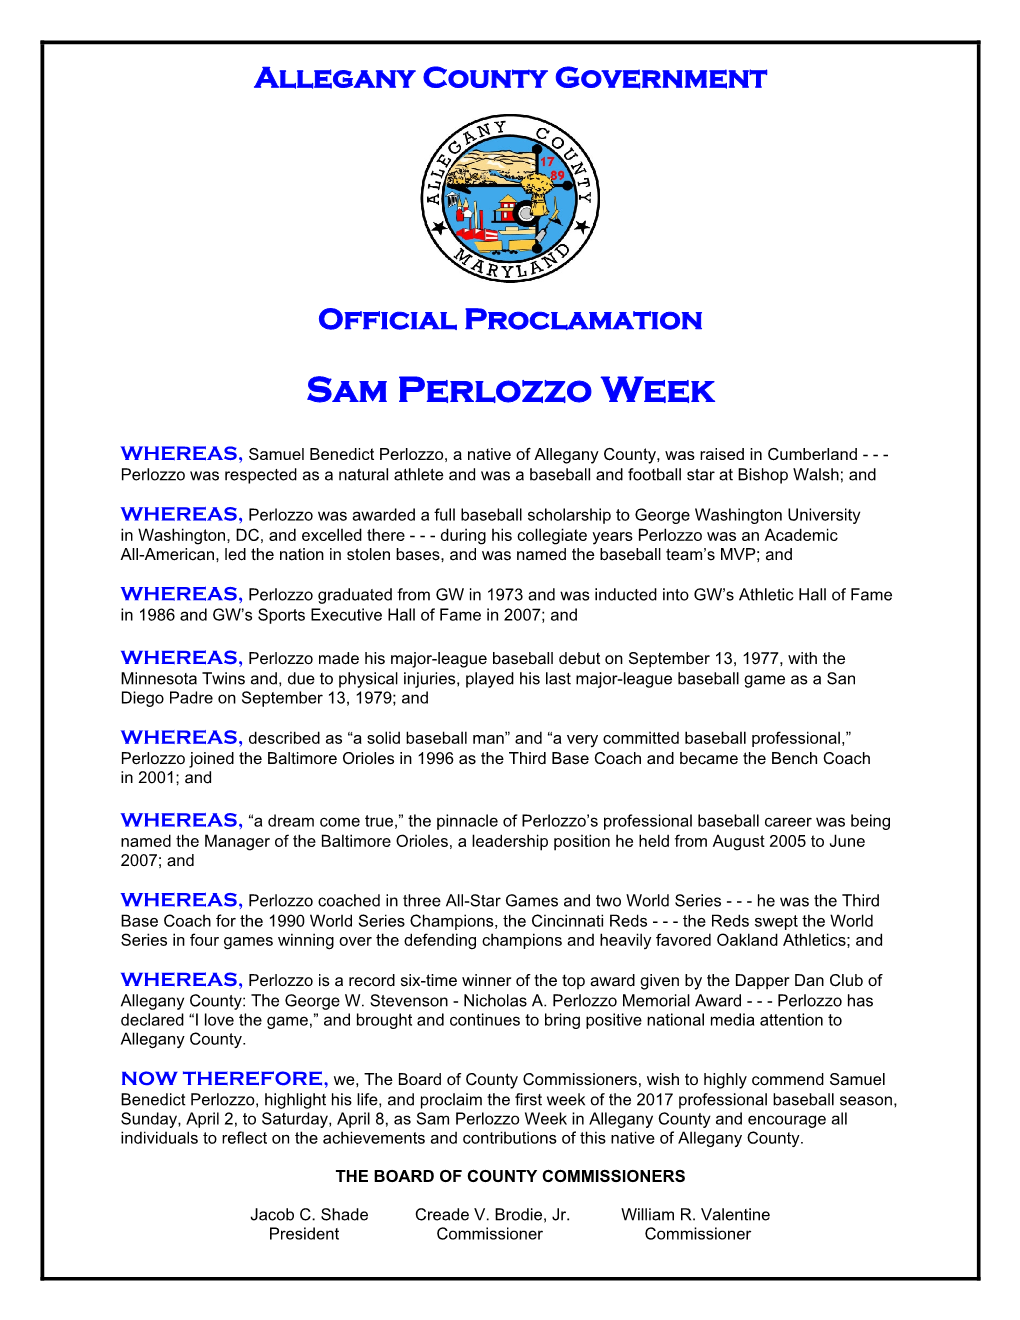 Sam Perlozzo Week